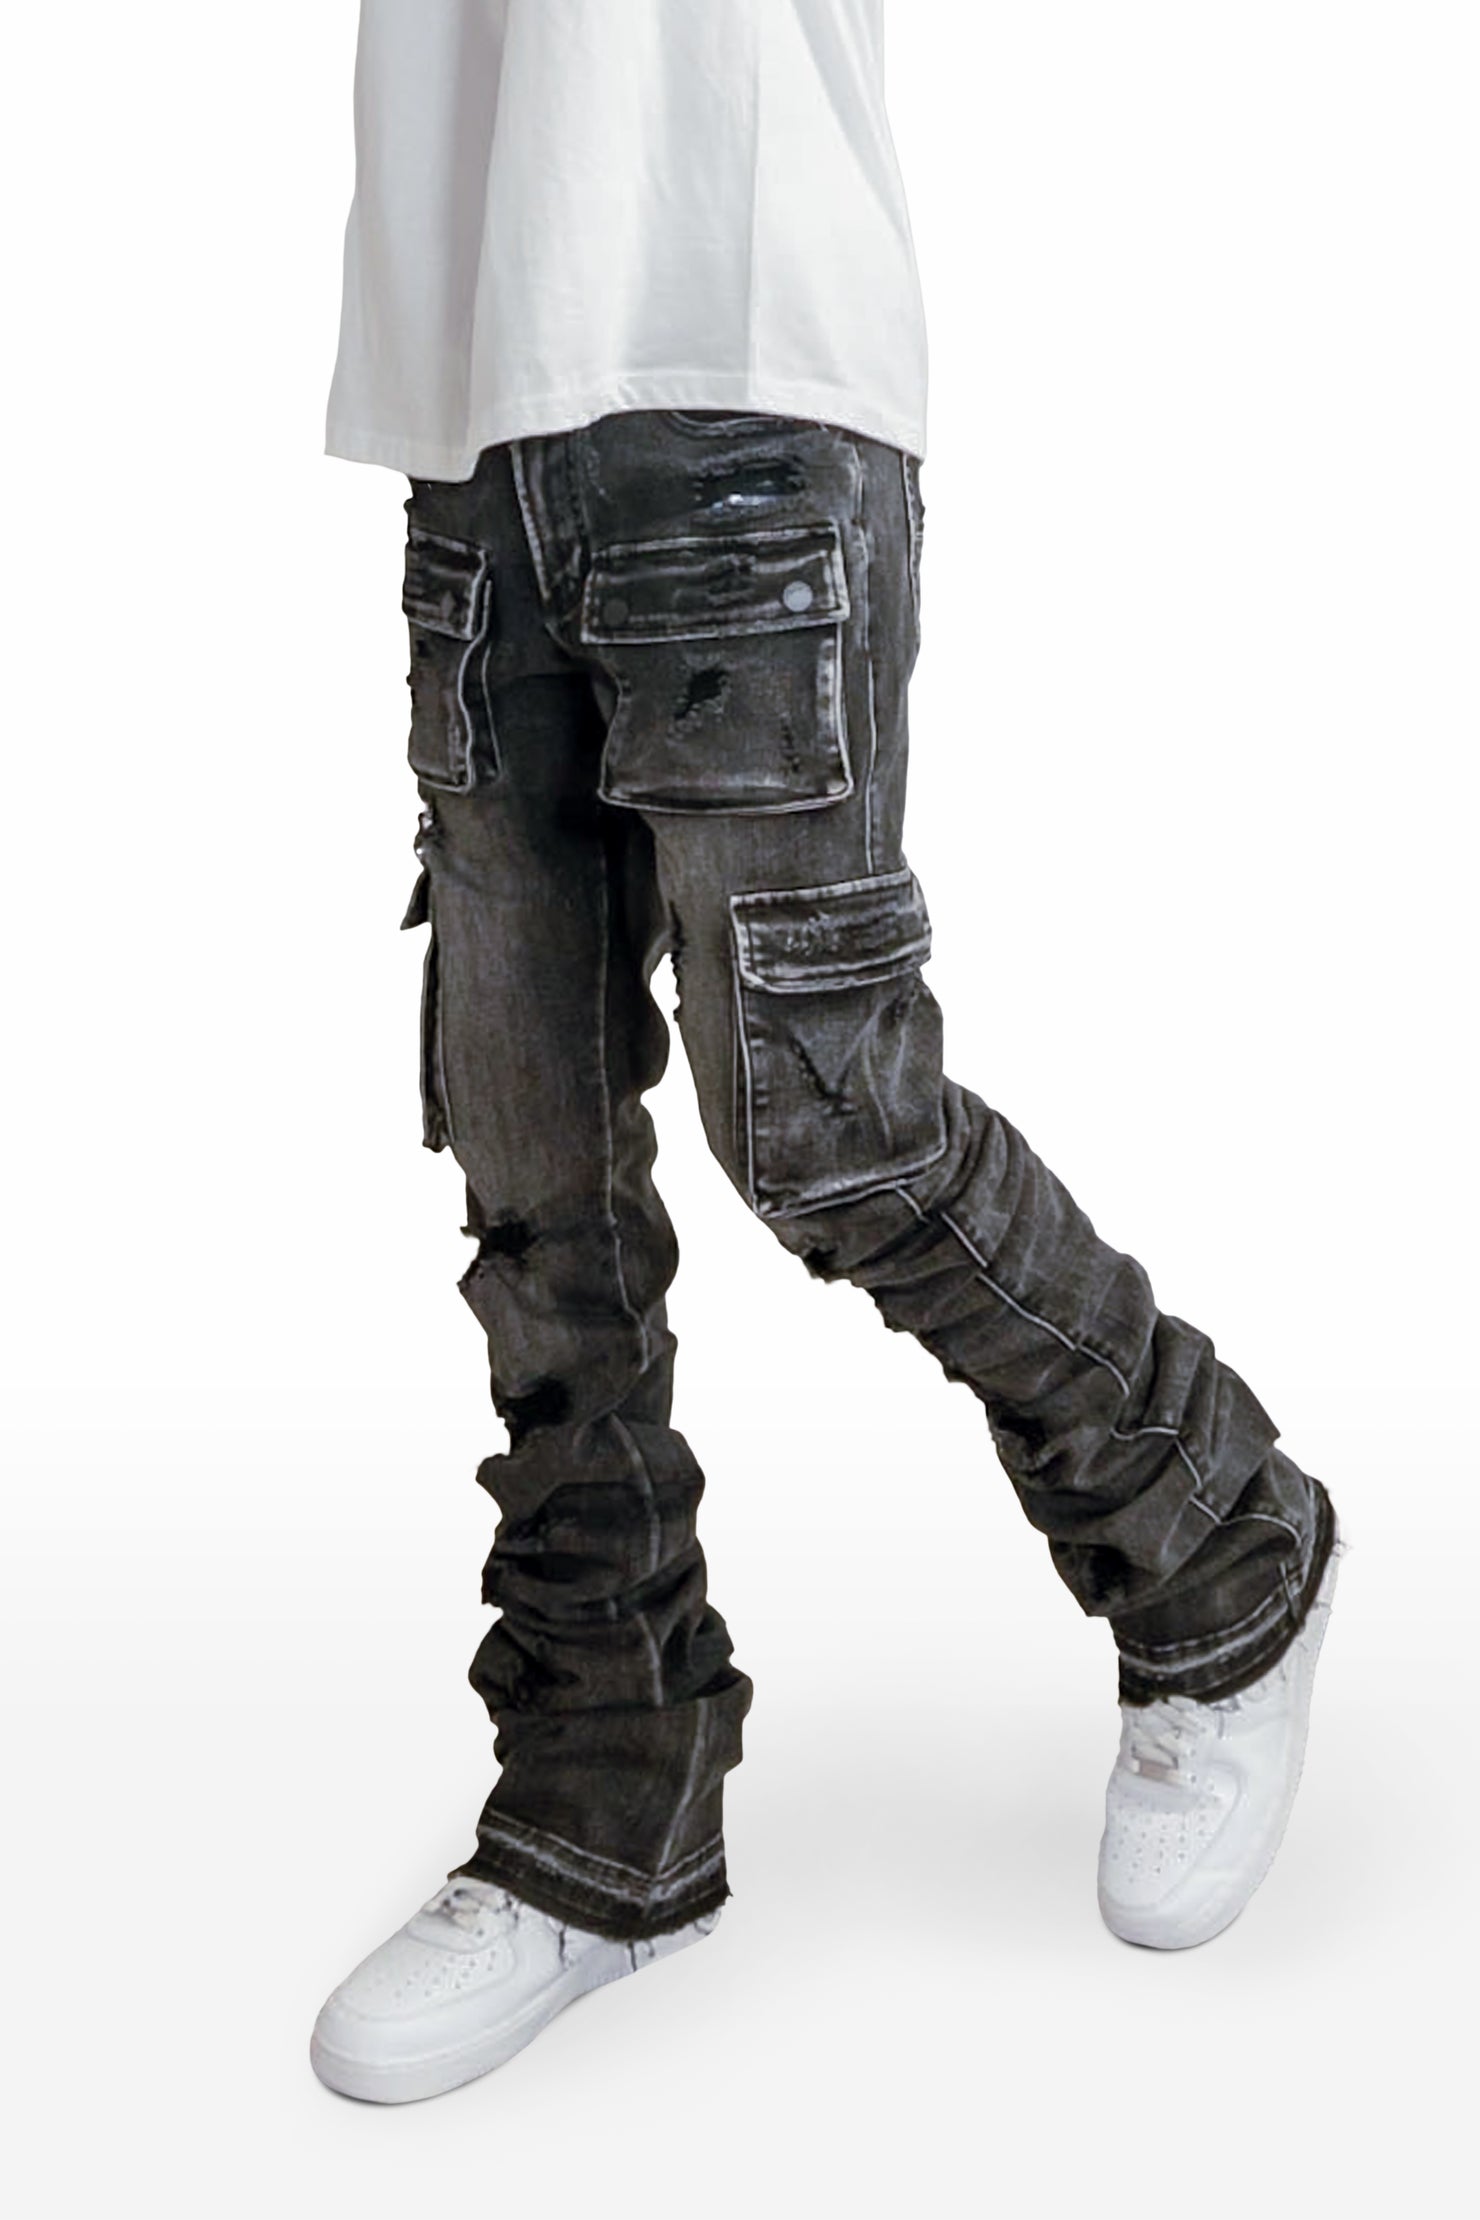 Rohan Wash Gray Cargo Super Stacked Flare Jean– Rockstar Original